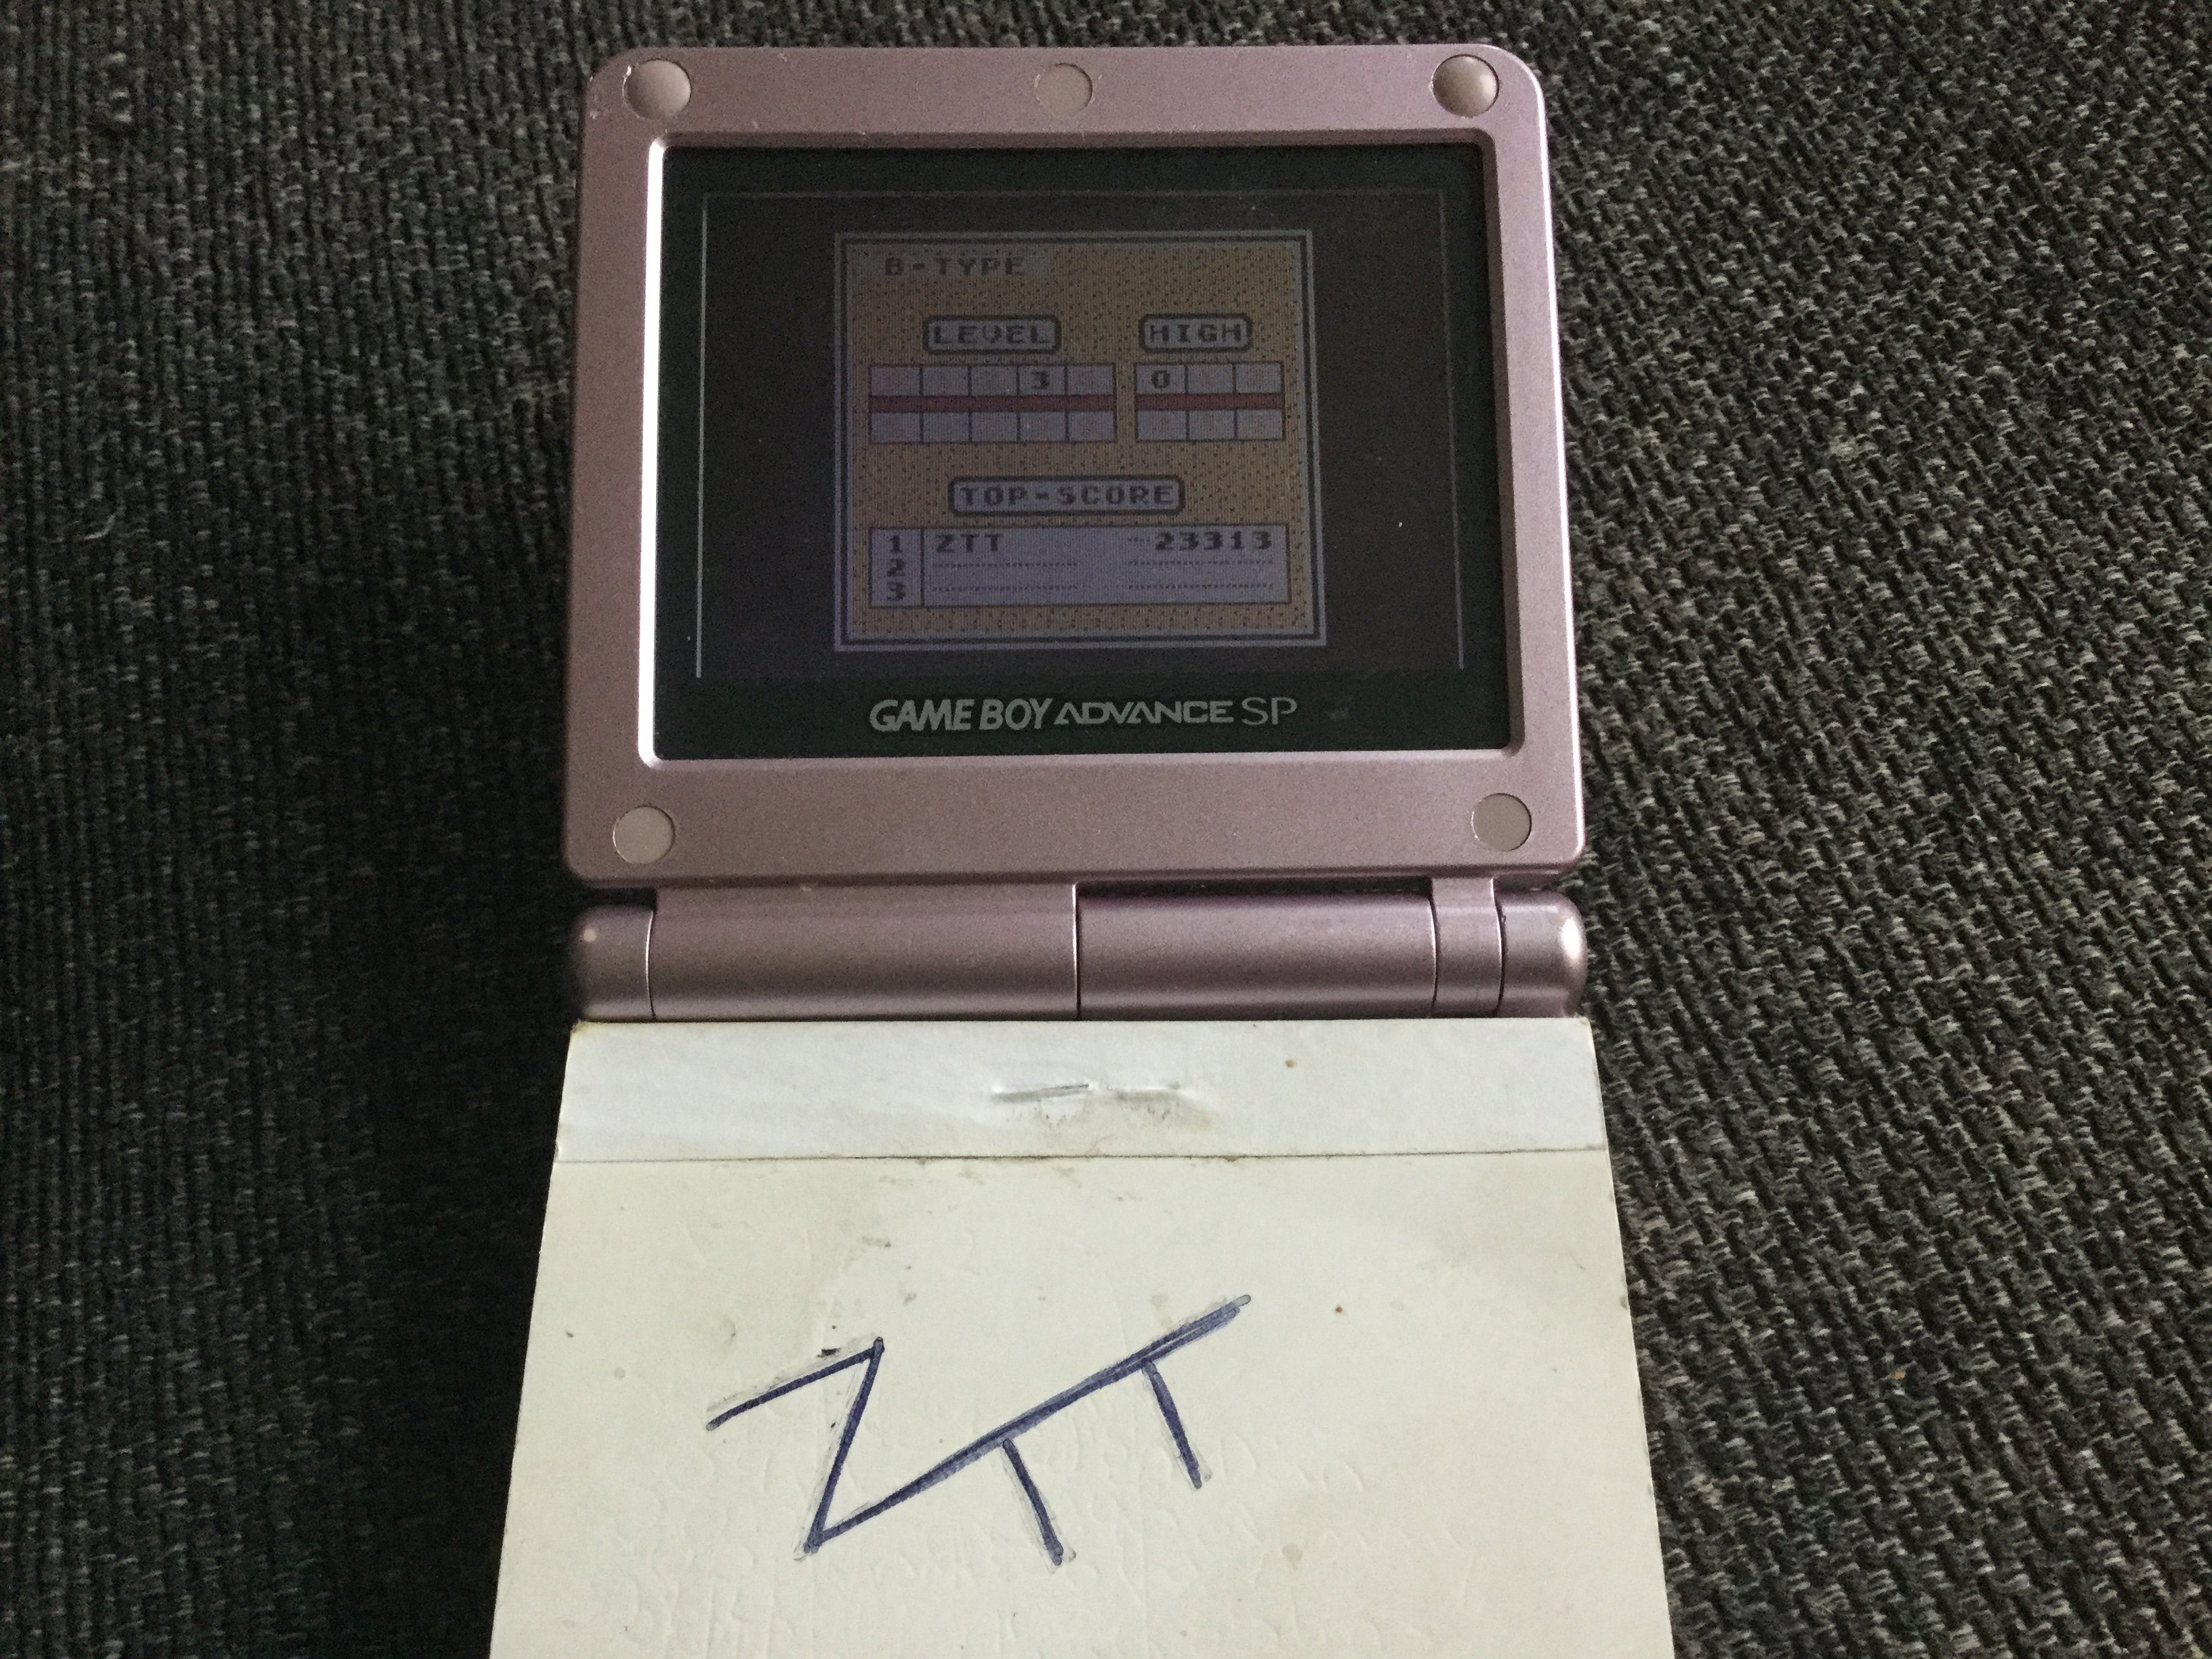 Frankie: Tetris: Type B [Level 3 / High 0] (Game Boy) 23,313 points on 2019-11-18 04:30:18